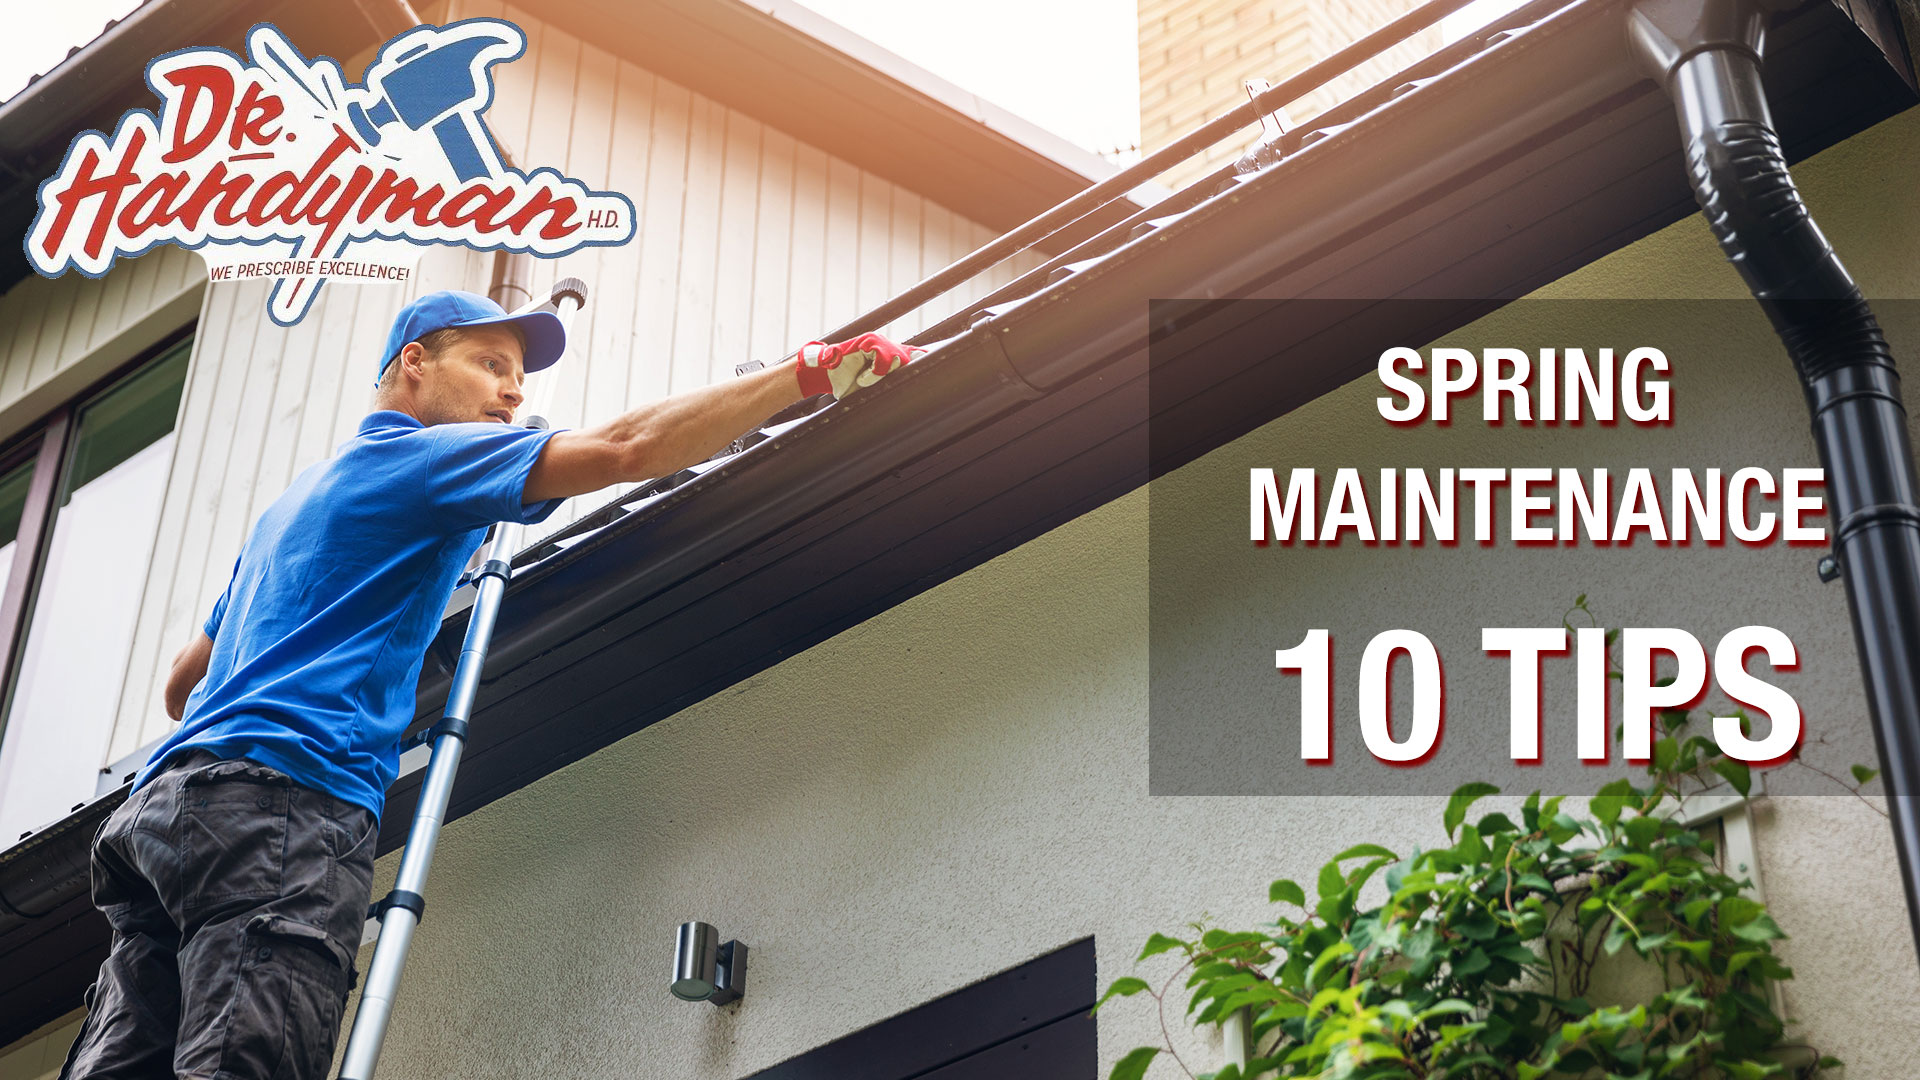 Dr-Handyman-10-Tips-Spring-Maintenance